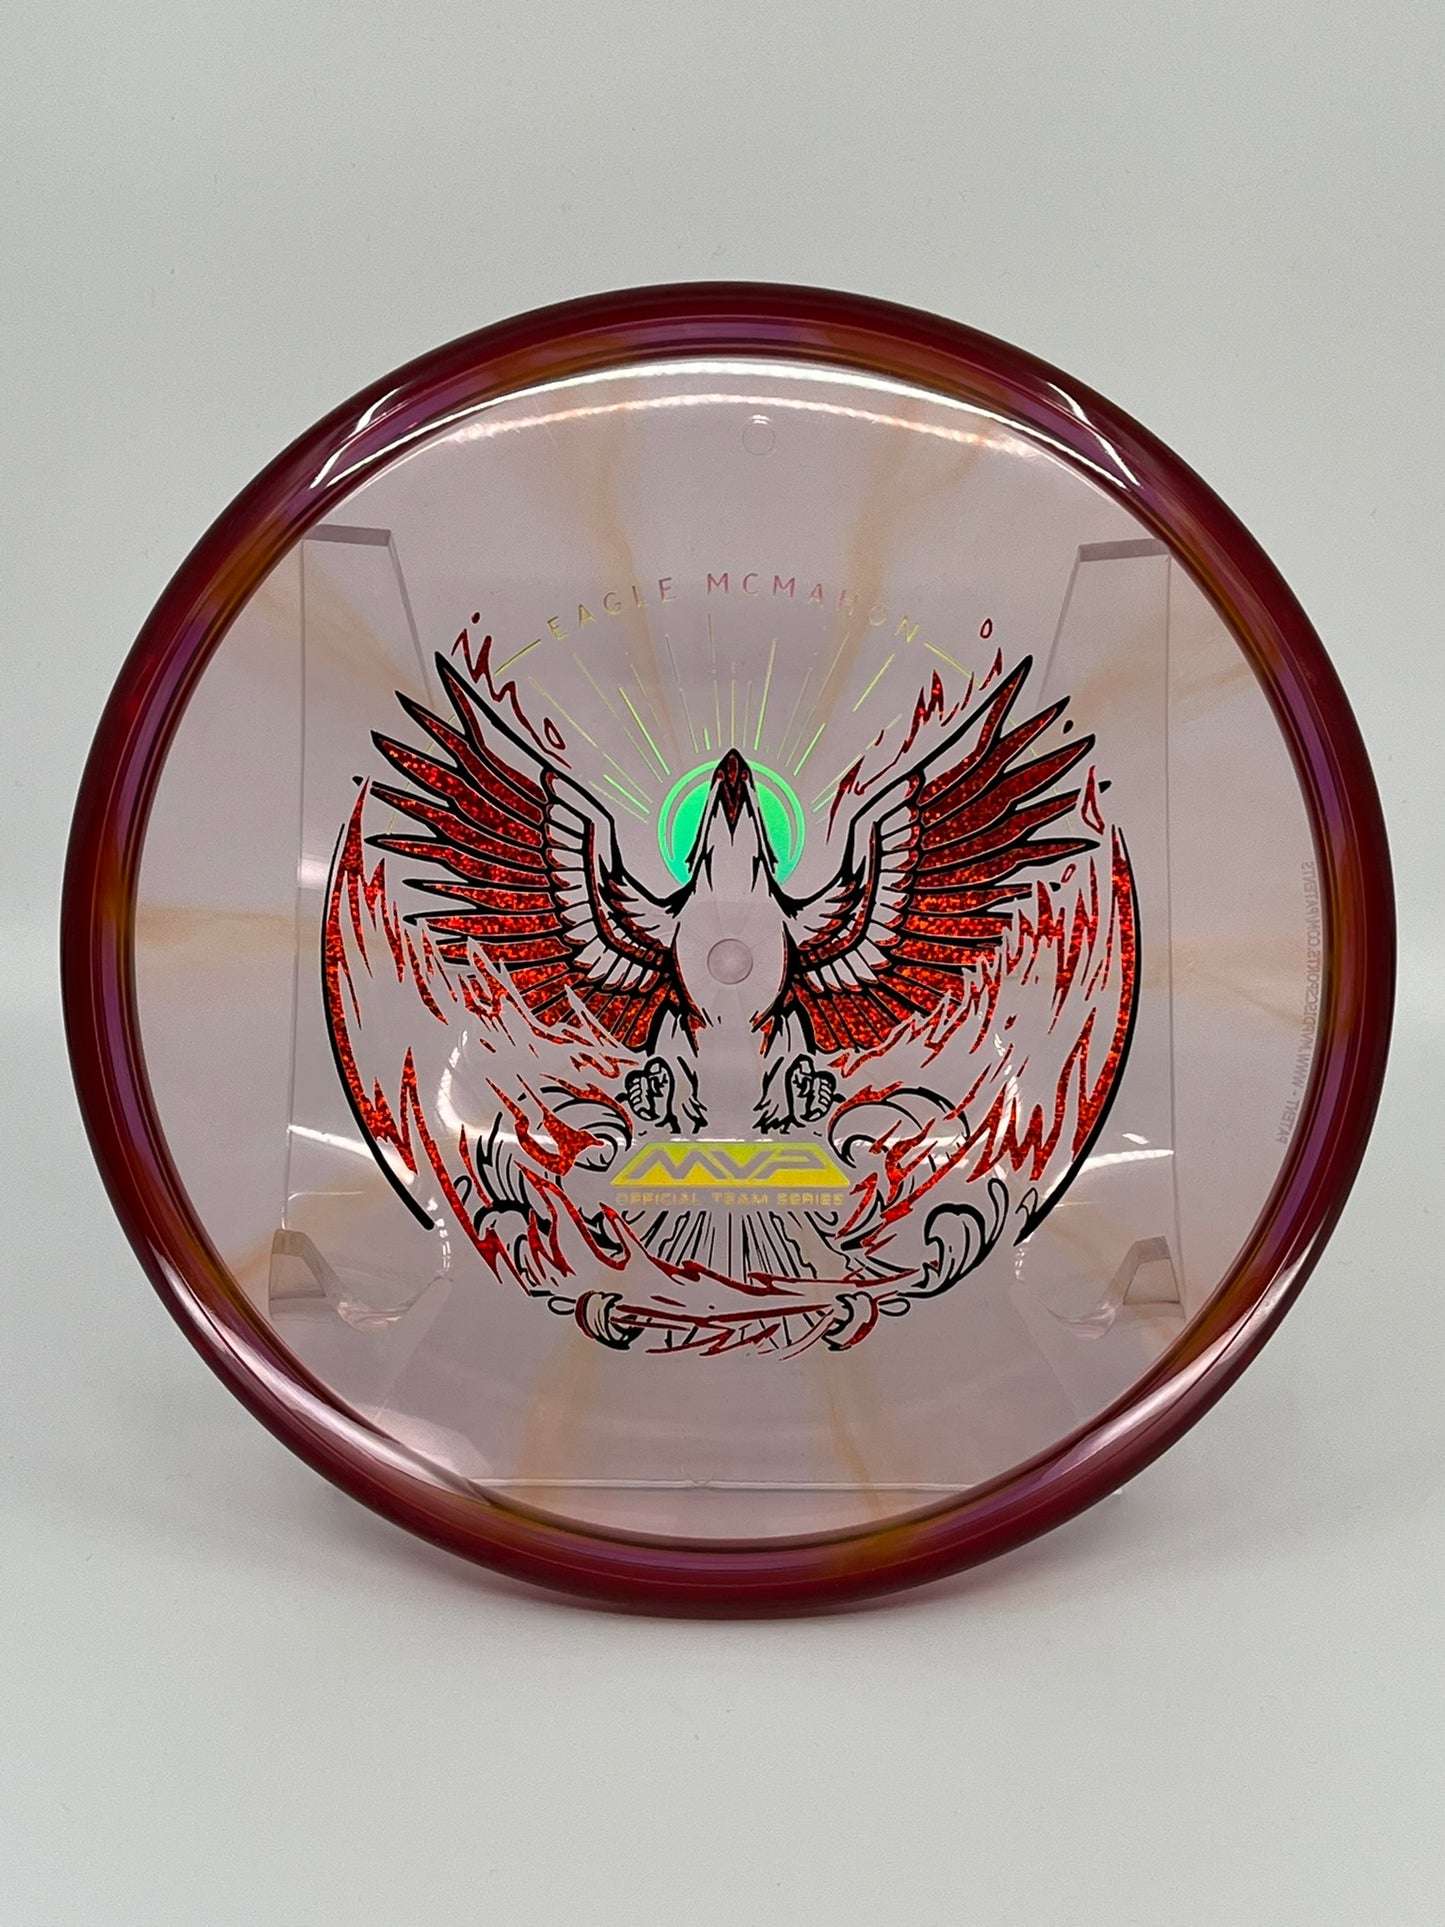 Axiom Prism Proton Envy "Rebirth" Eagle McMahon Team Series